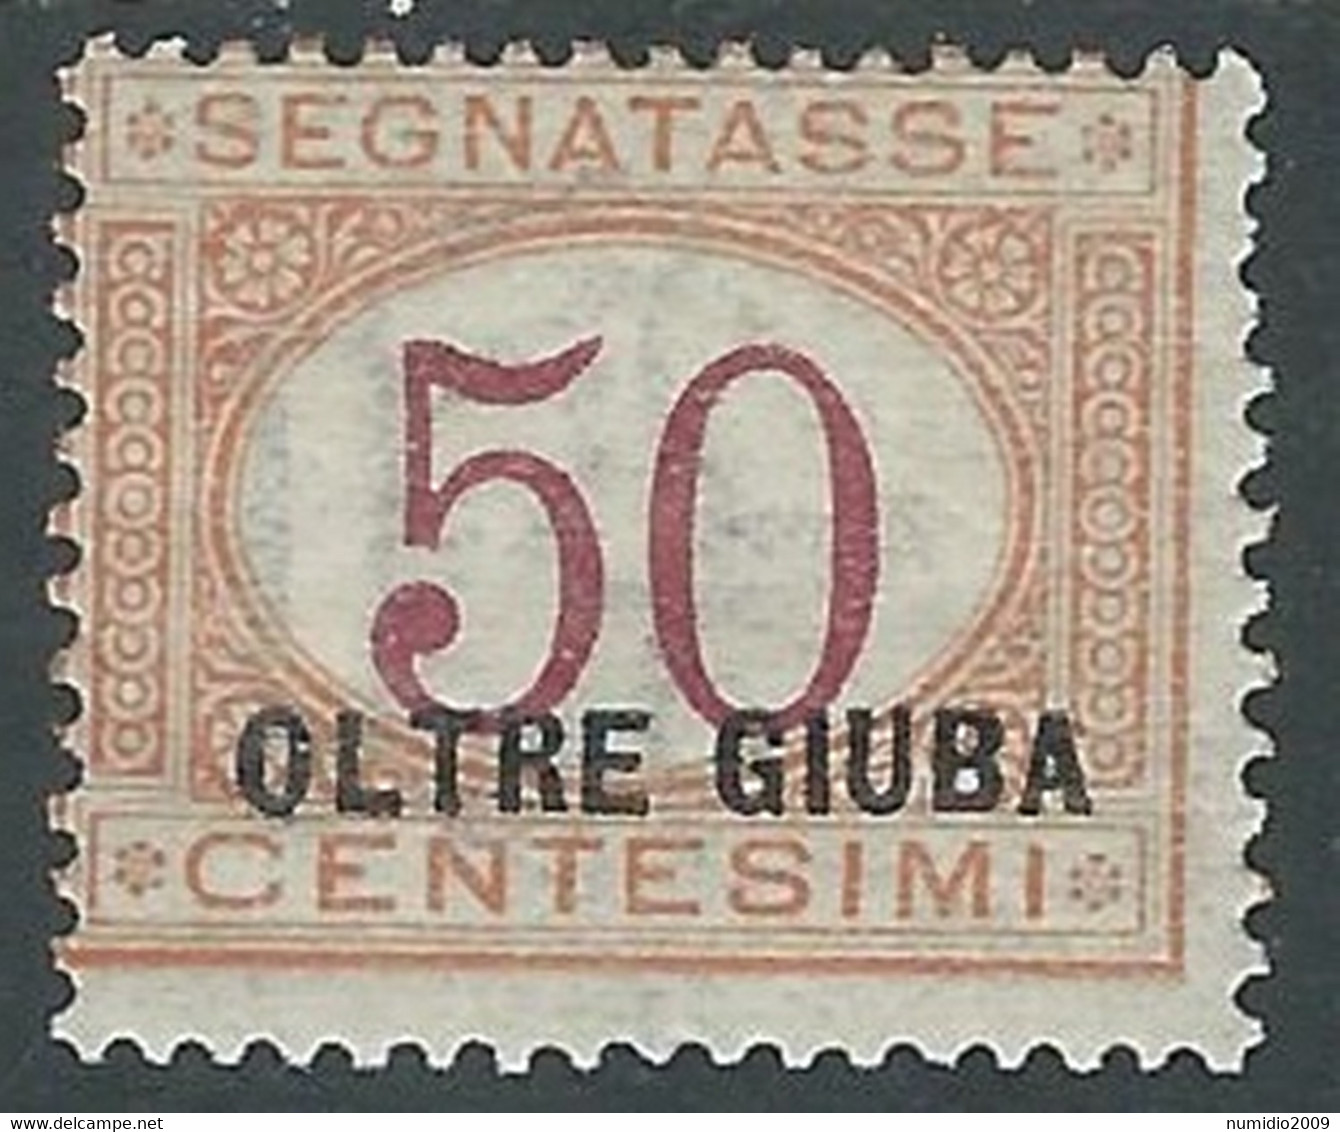 1925 OLTRE GIUBA SEGNATASSE 50 CENT MH * - RF37-2 - Oltre Giuba